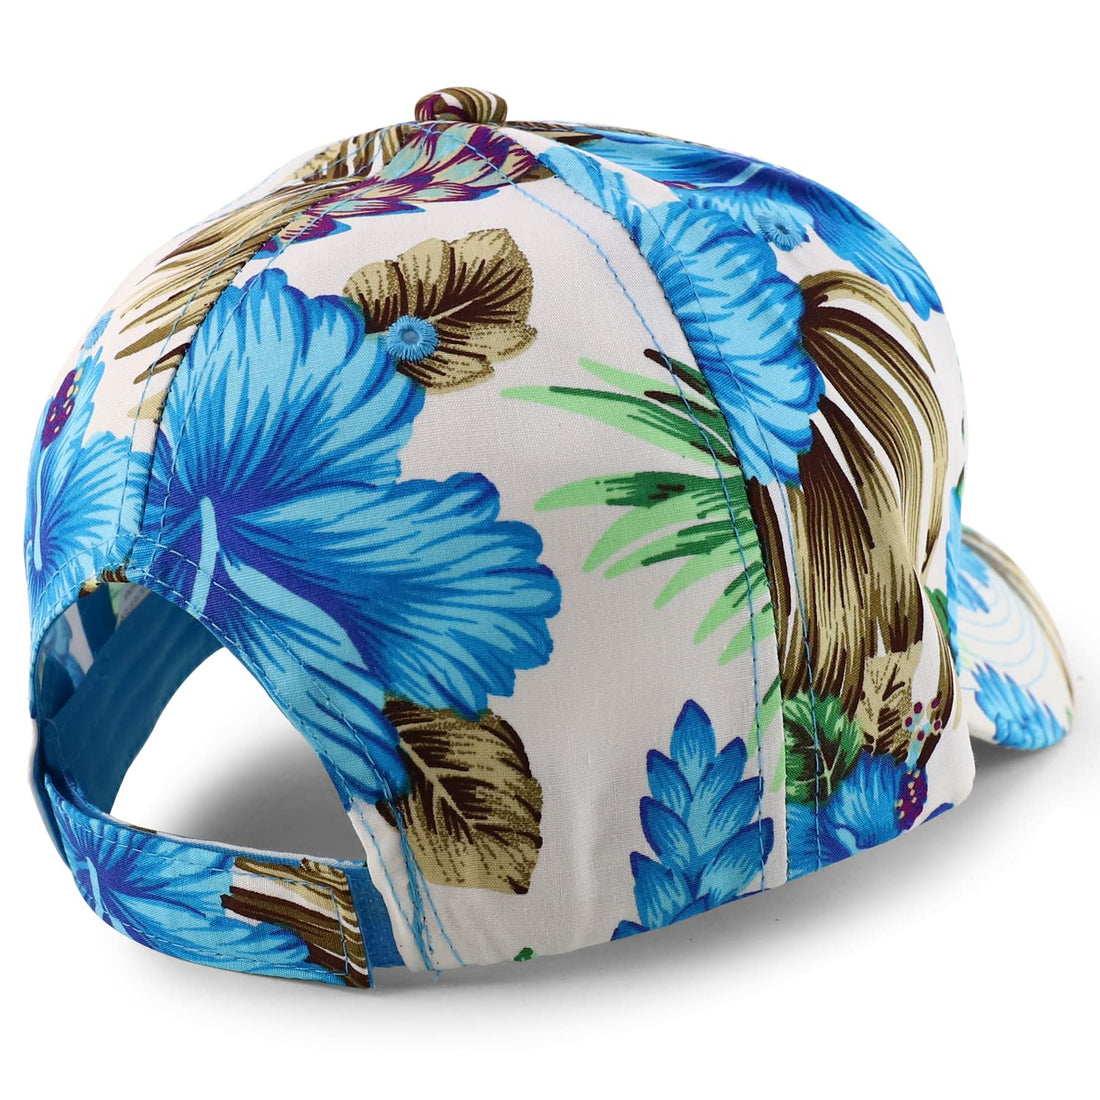 Trendy Apparel Shop Tropical Flower Hibiscus Pattern Print Baseball Cap